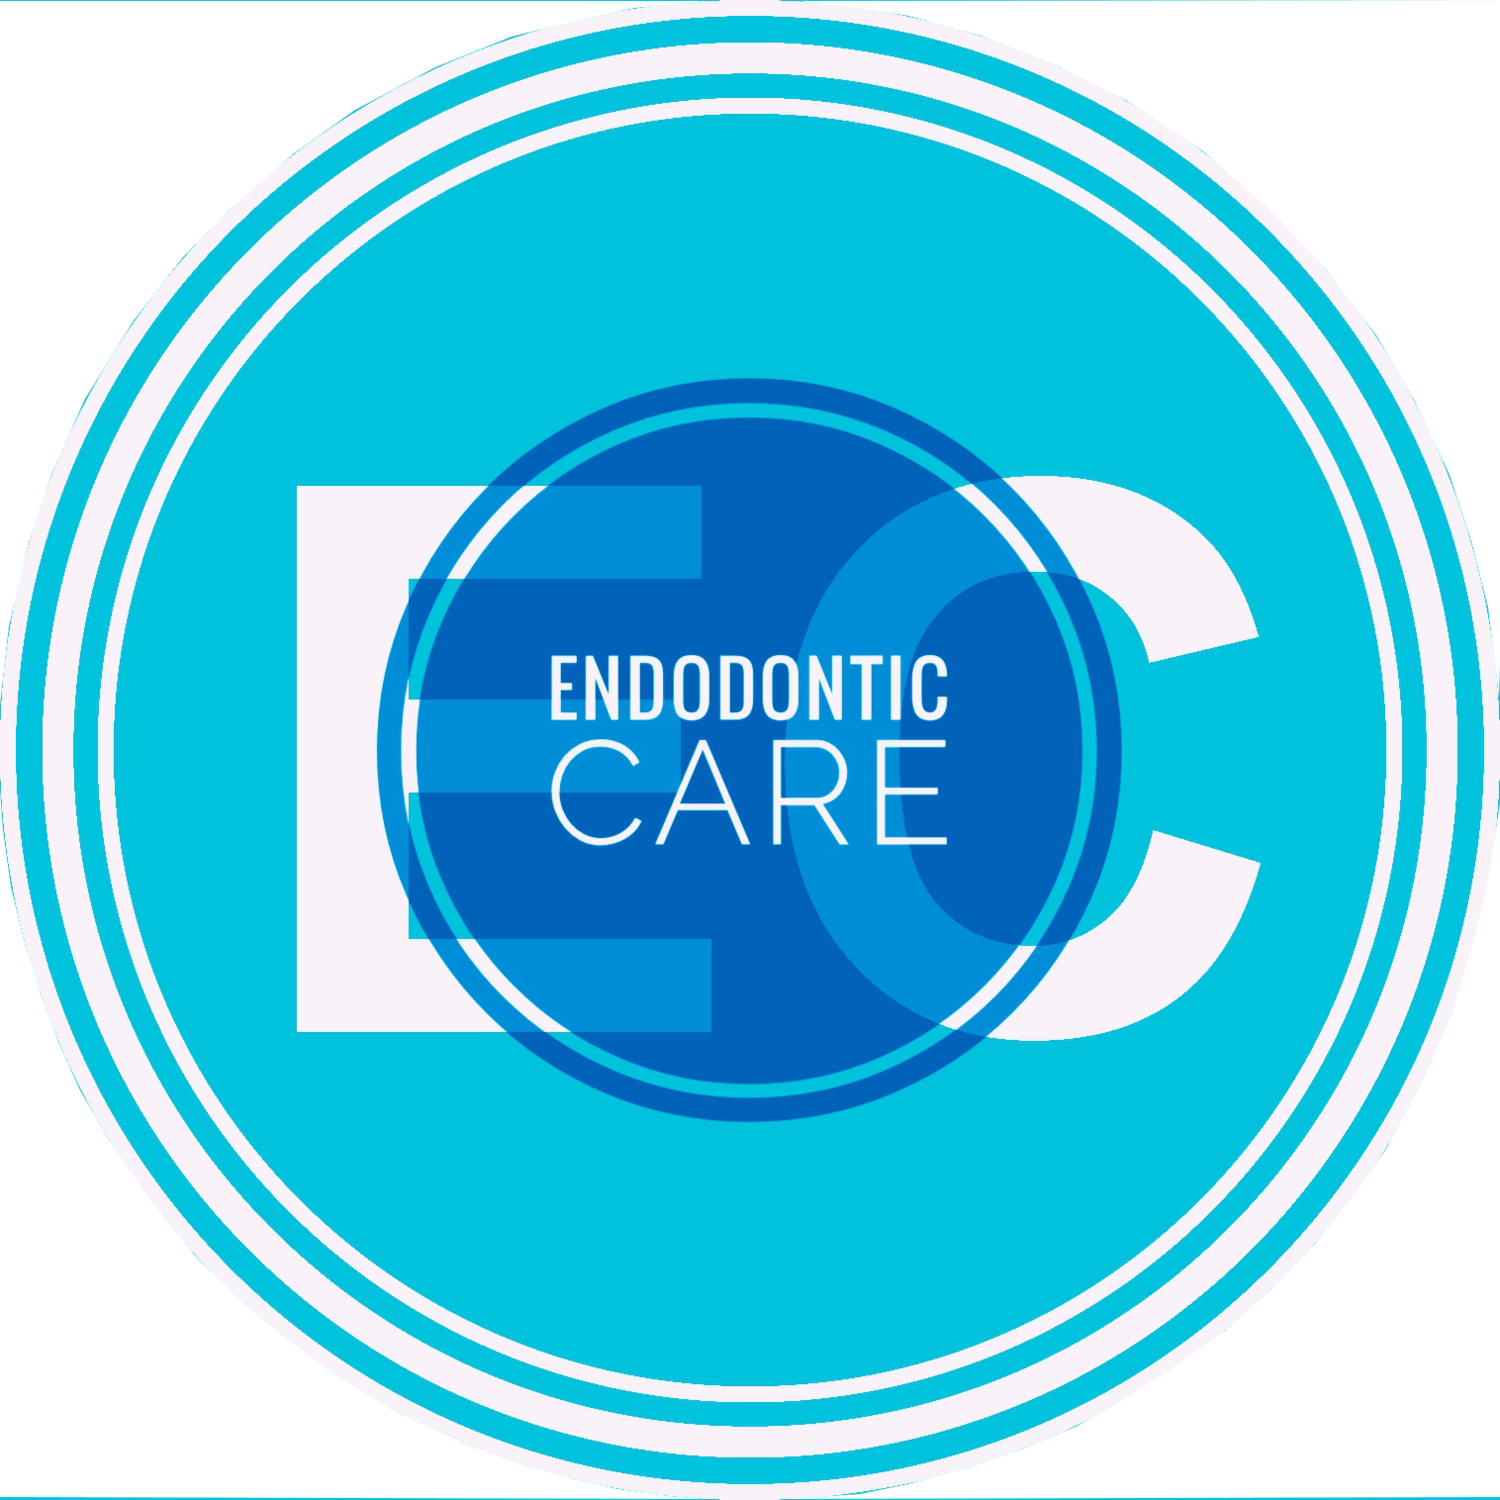 Endodontic Care (Copy) (Copy)